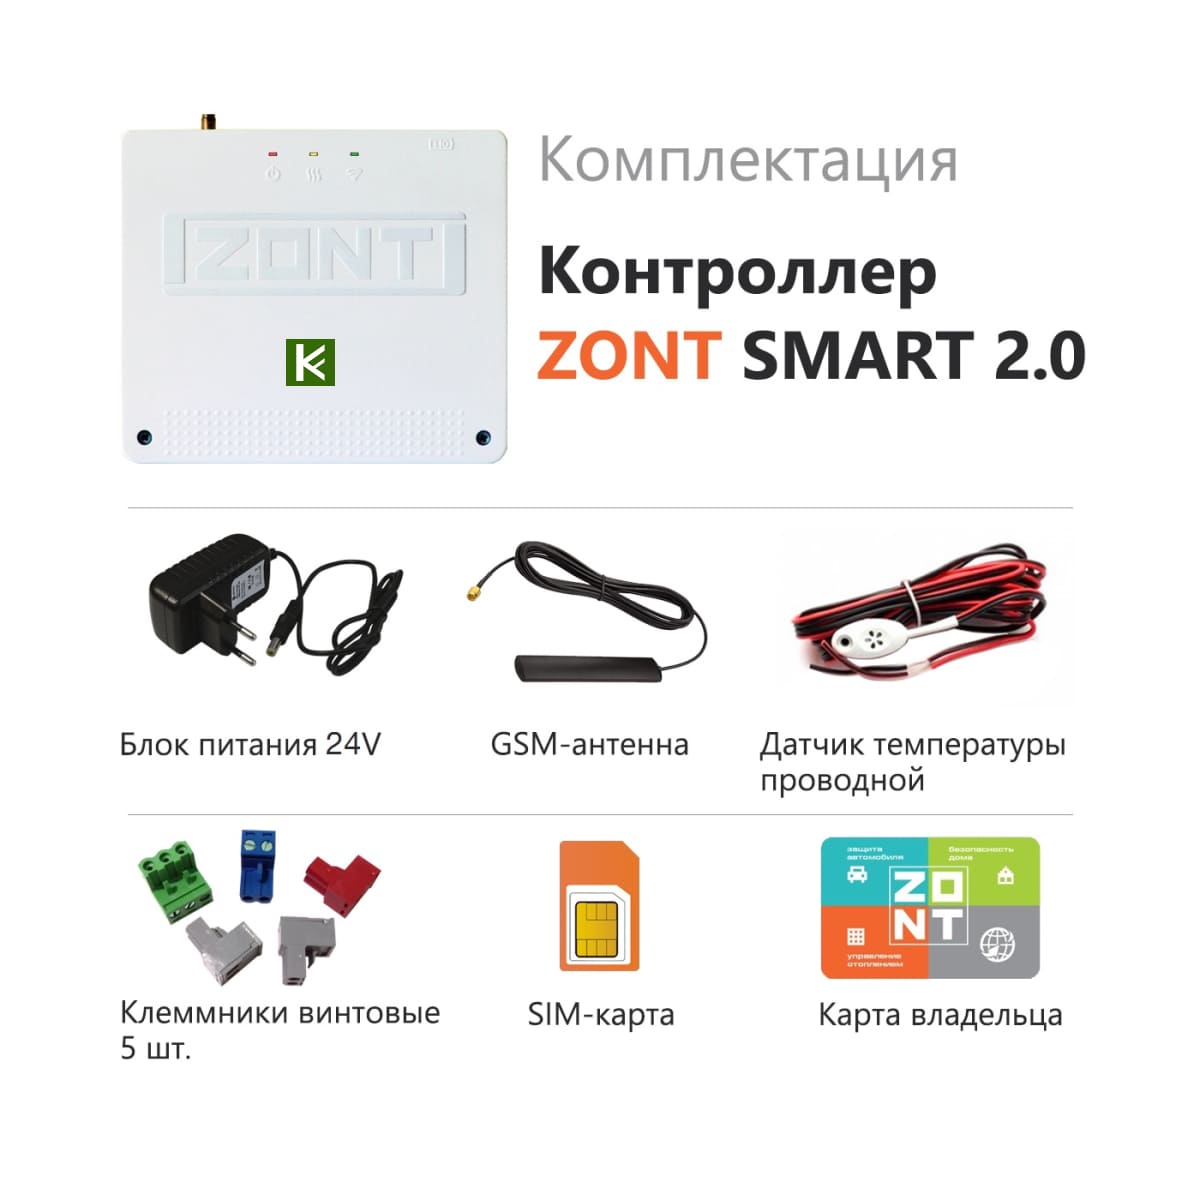 Zont карта. Ml00004479 Zont Smart 2.0. Контроллер Zont Smart 2.0. Отопительный контроллер GSM Wi-Fi Zont Smart 2.0. Zont Smart 2.0 в шкафу.